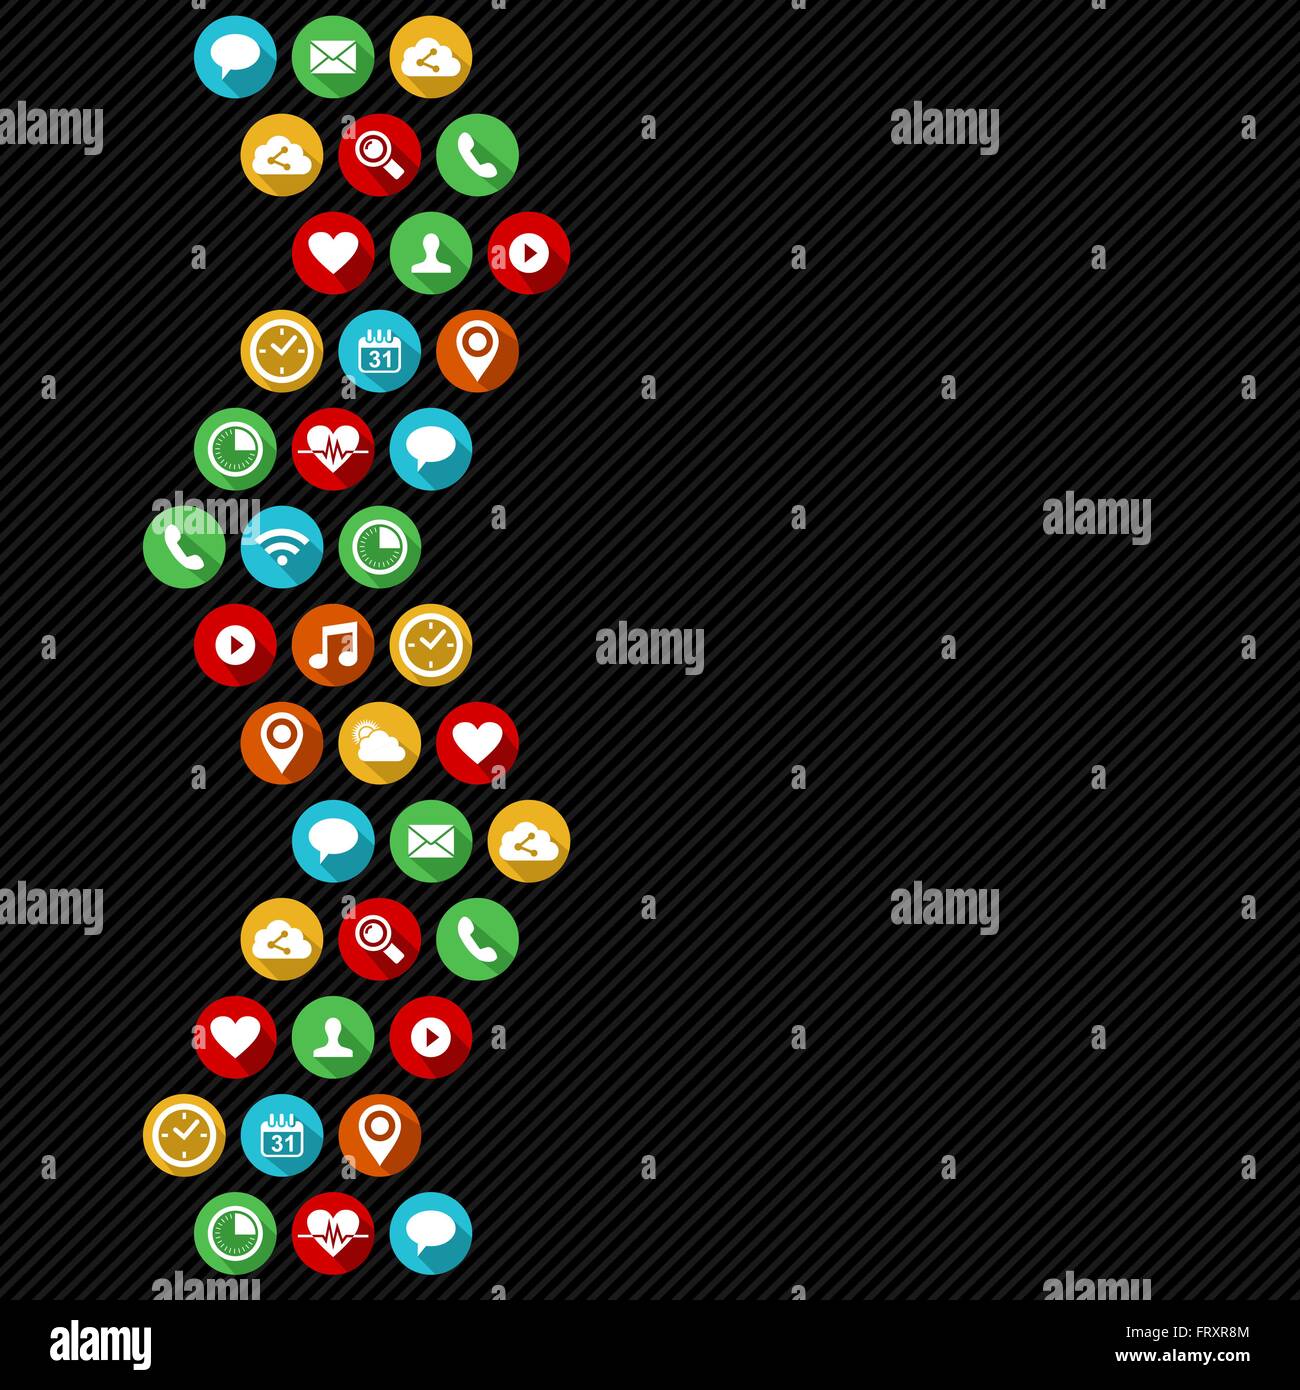 Moderne app Icon Design-Hintergrund in Wohnung Kunststil, umfasst social-Buttons, Gps und Web Badges. EPS10 Vektor. Stock Vektor